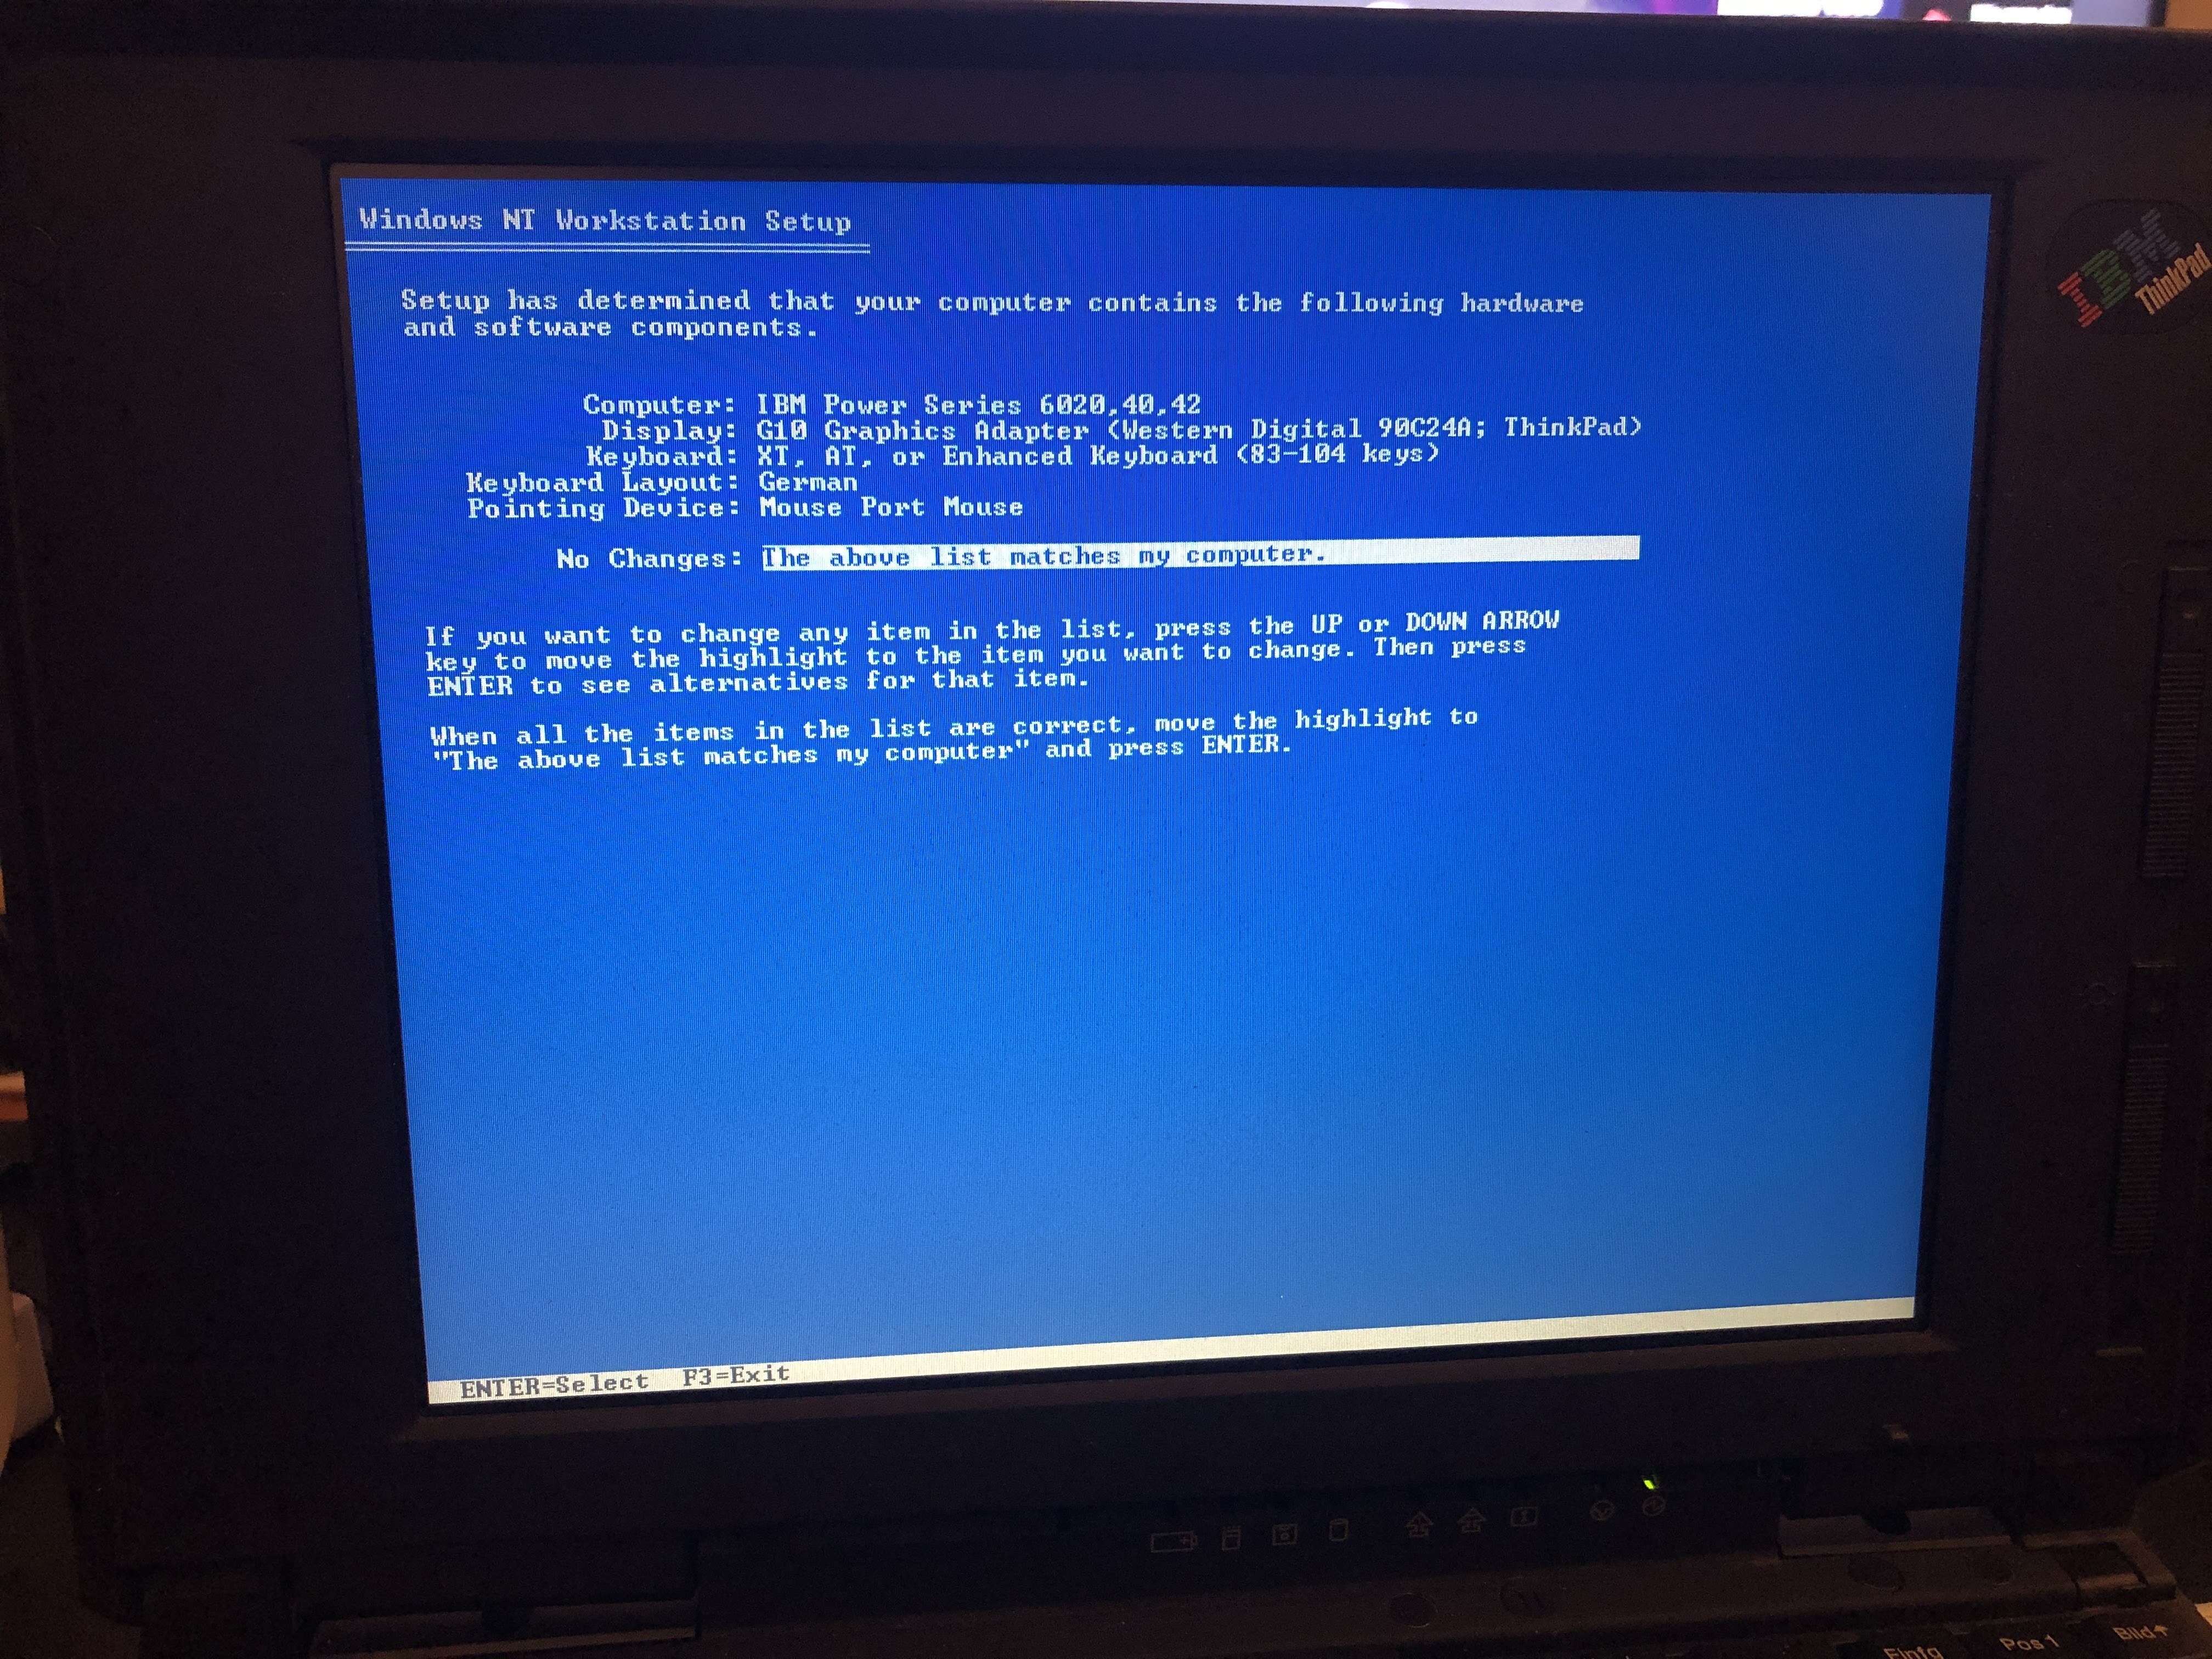 Windows NT 4.0 setup dialog